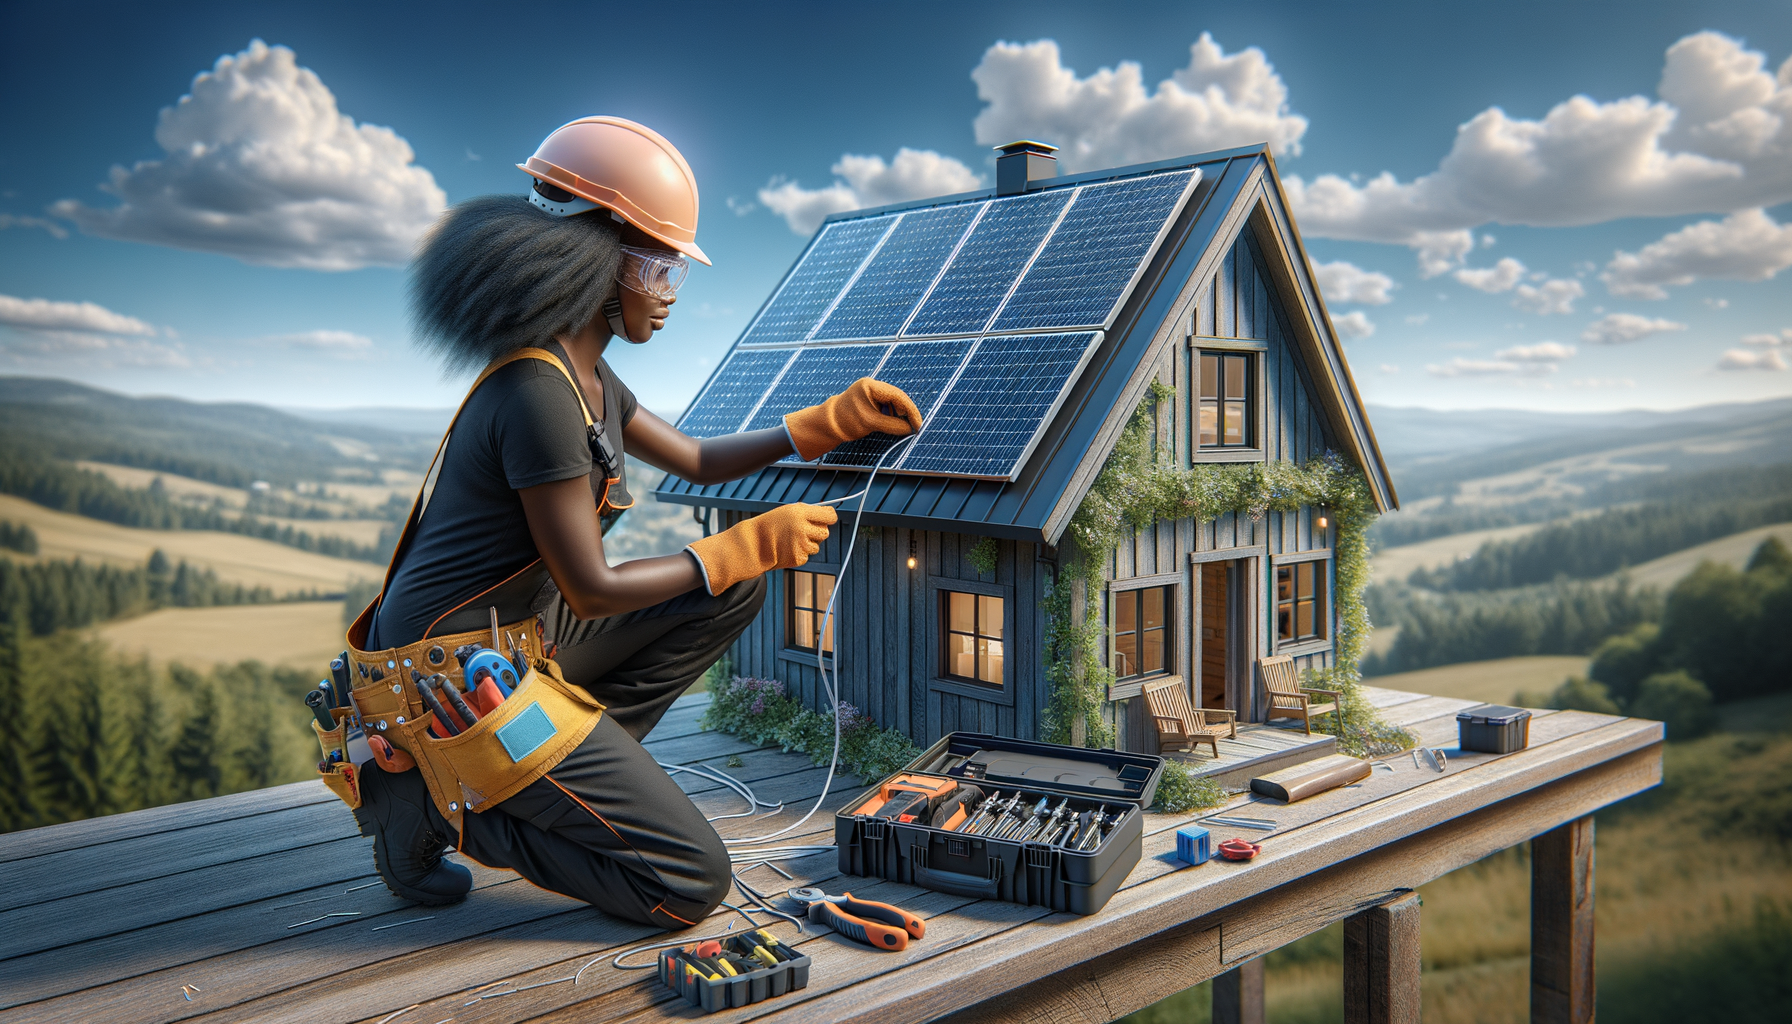 ALT: Professional solar panel installation on a tiny home